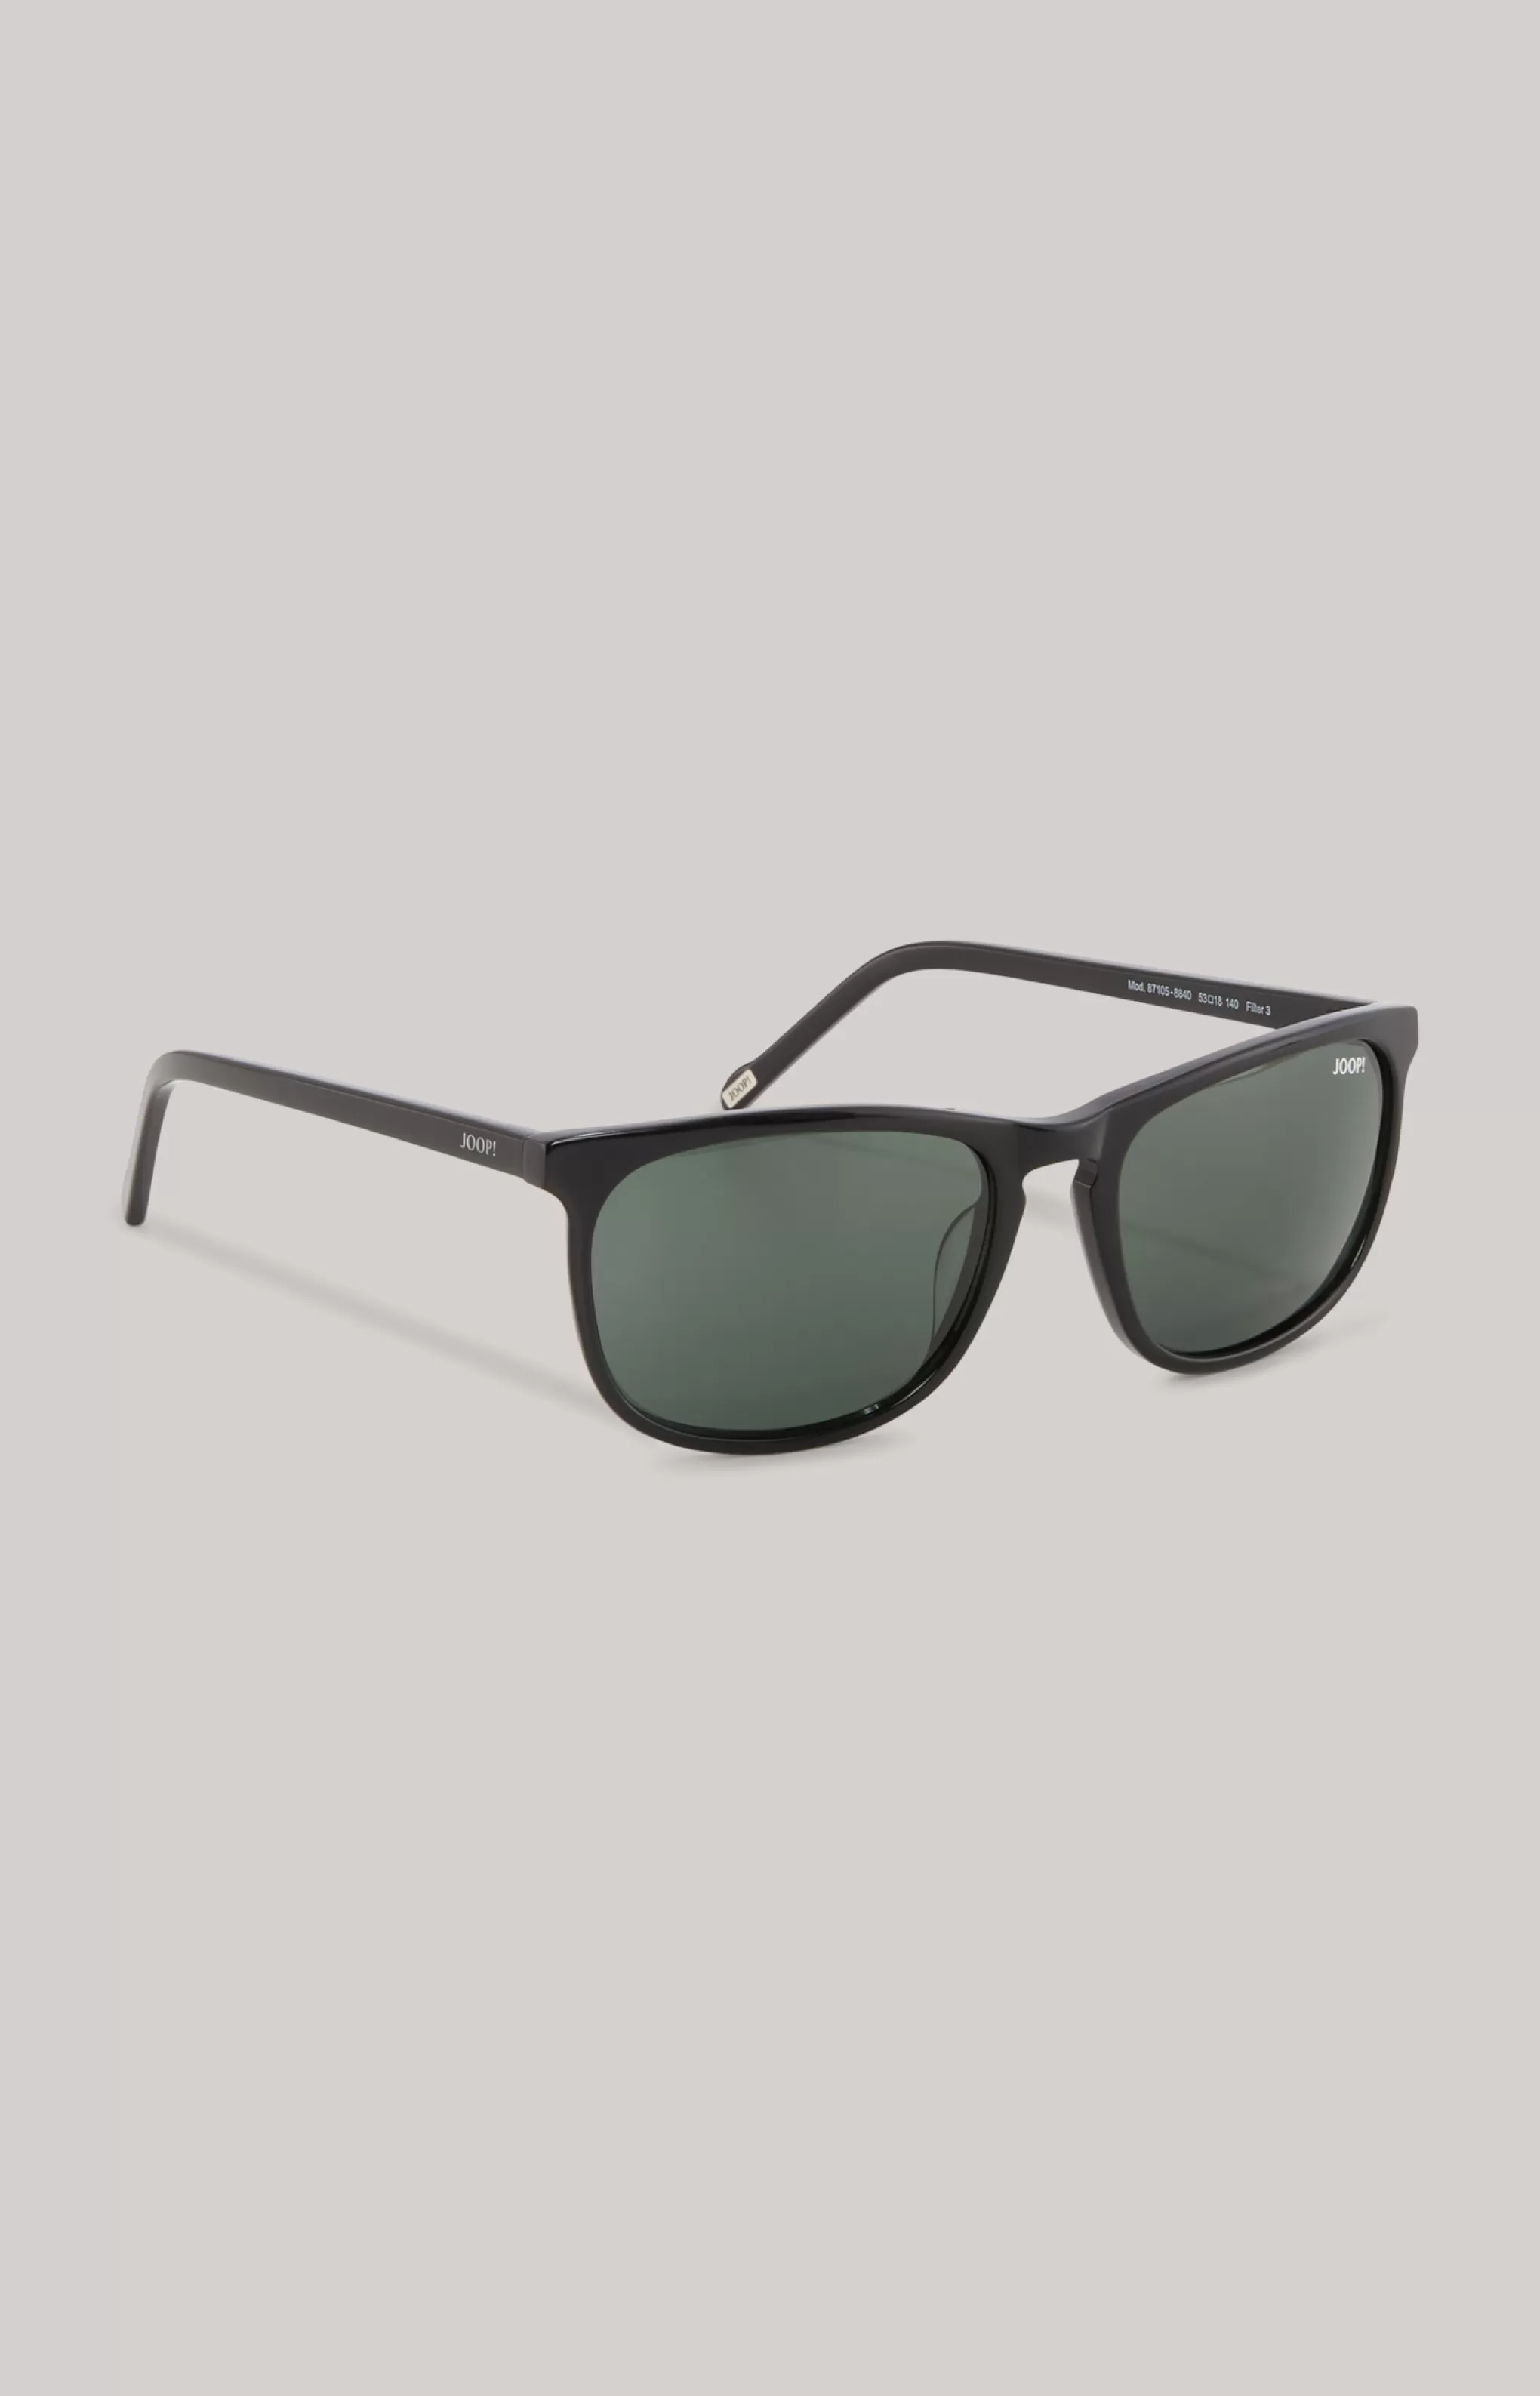 Sunglasses*JOOP Sunglasses Black/Green Sunglasses